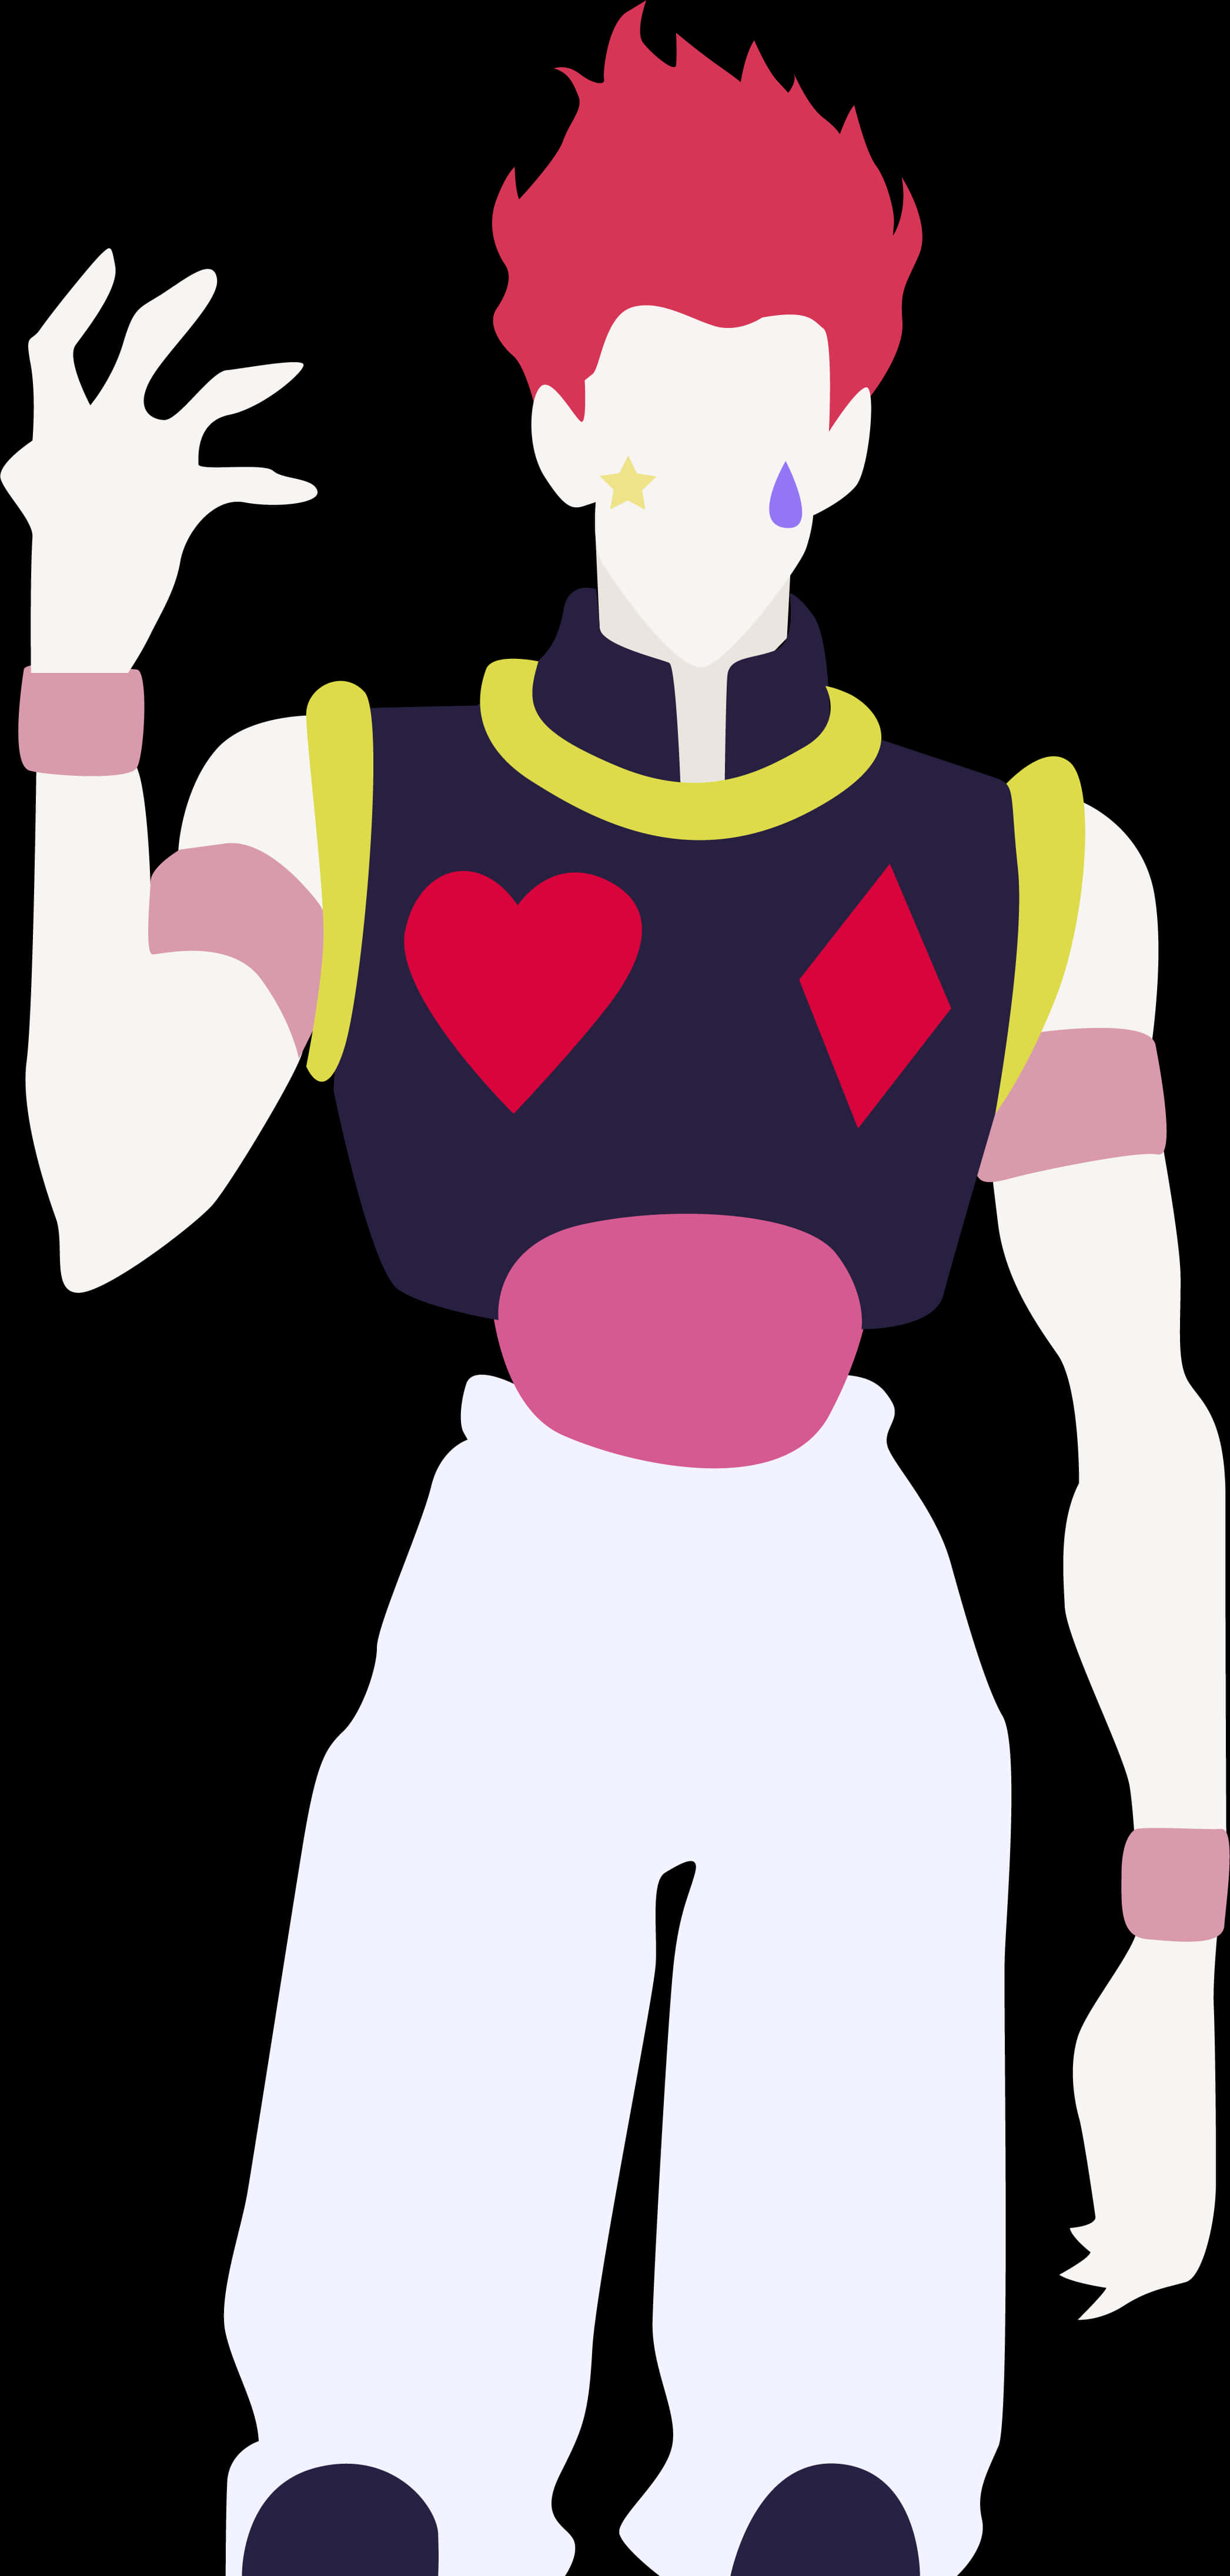 Hisoka Magician Anime Character PNG image